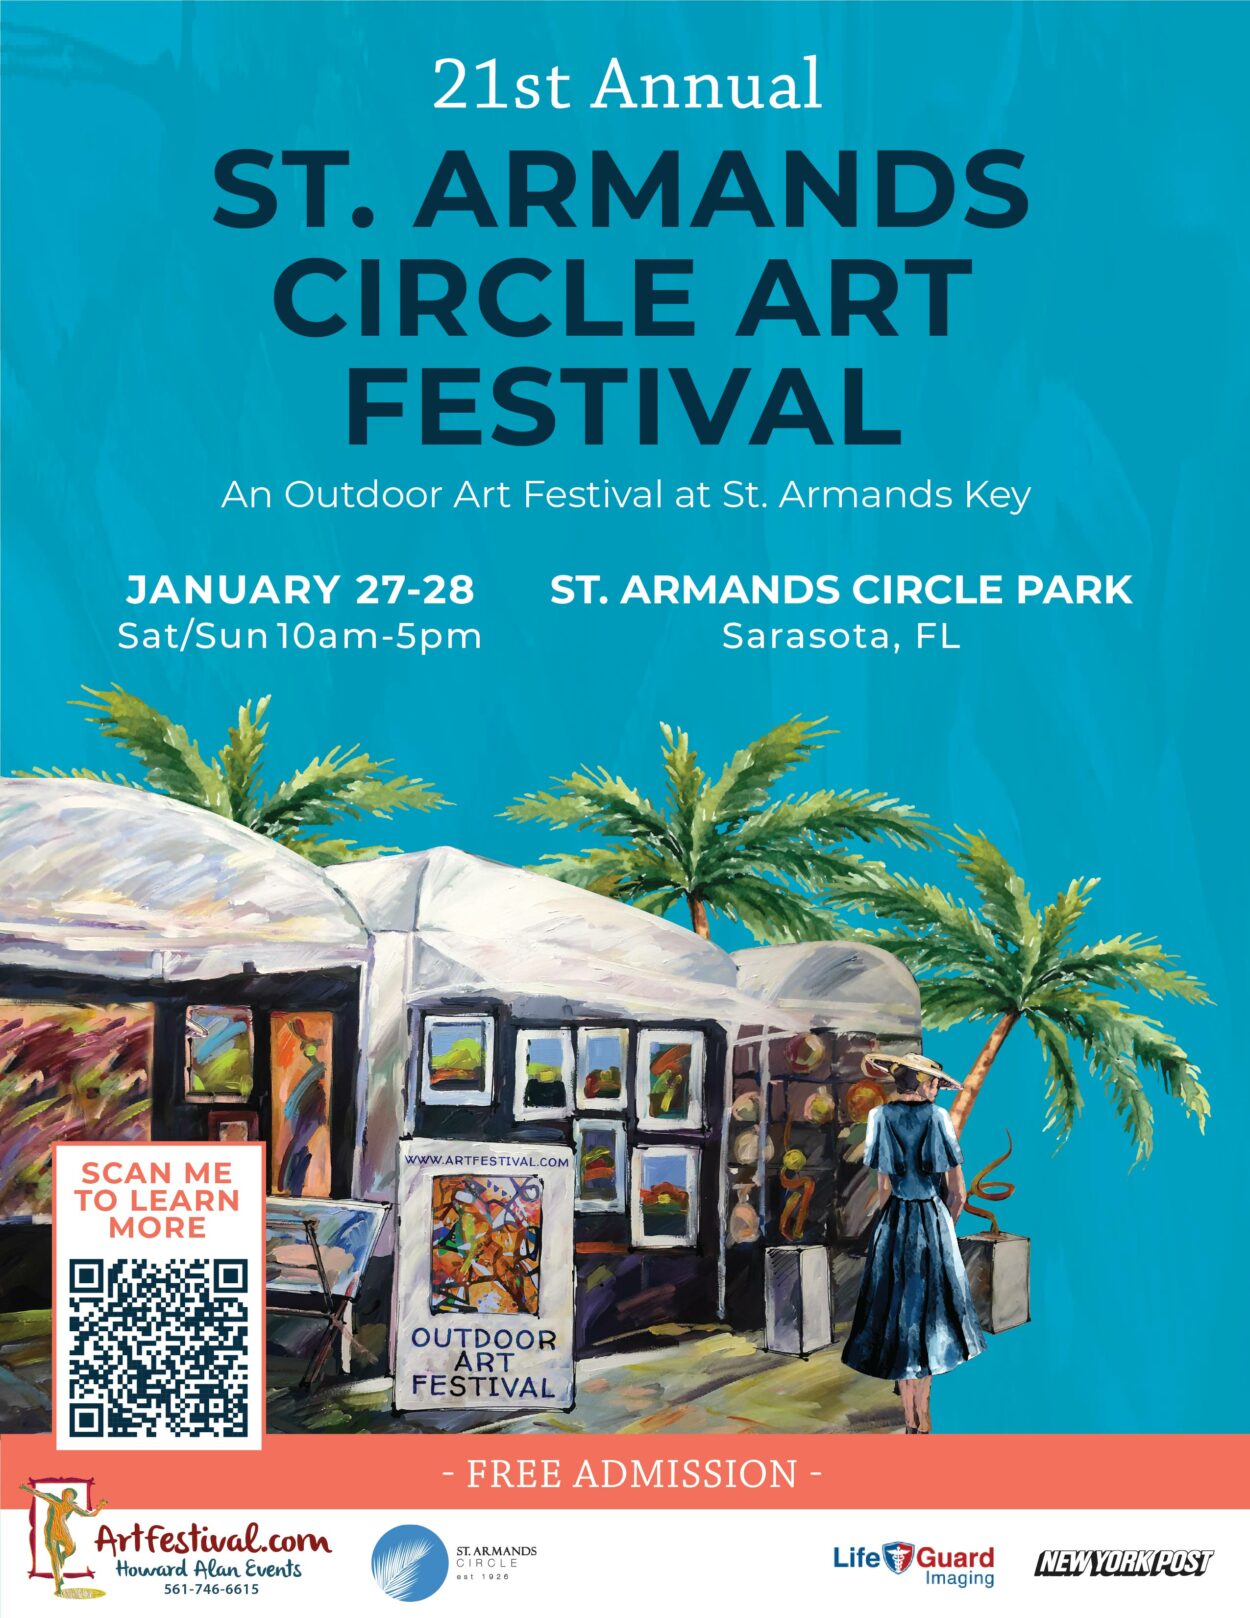 St. Armands Circle Art Festival